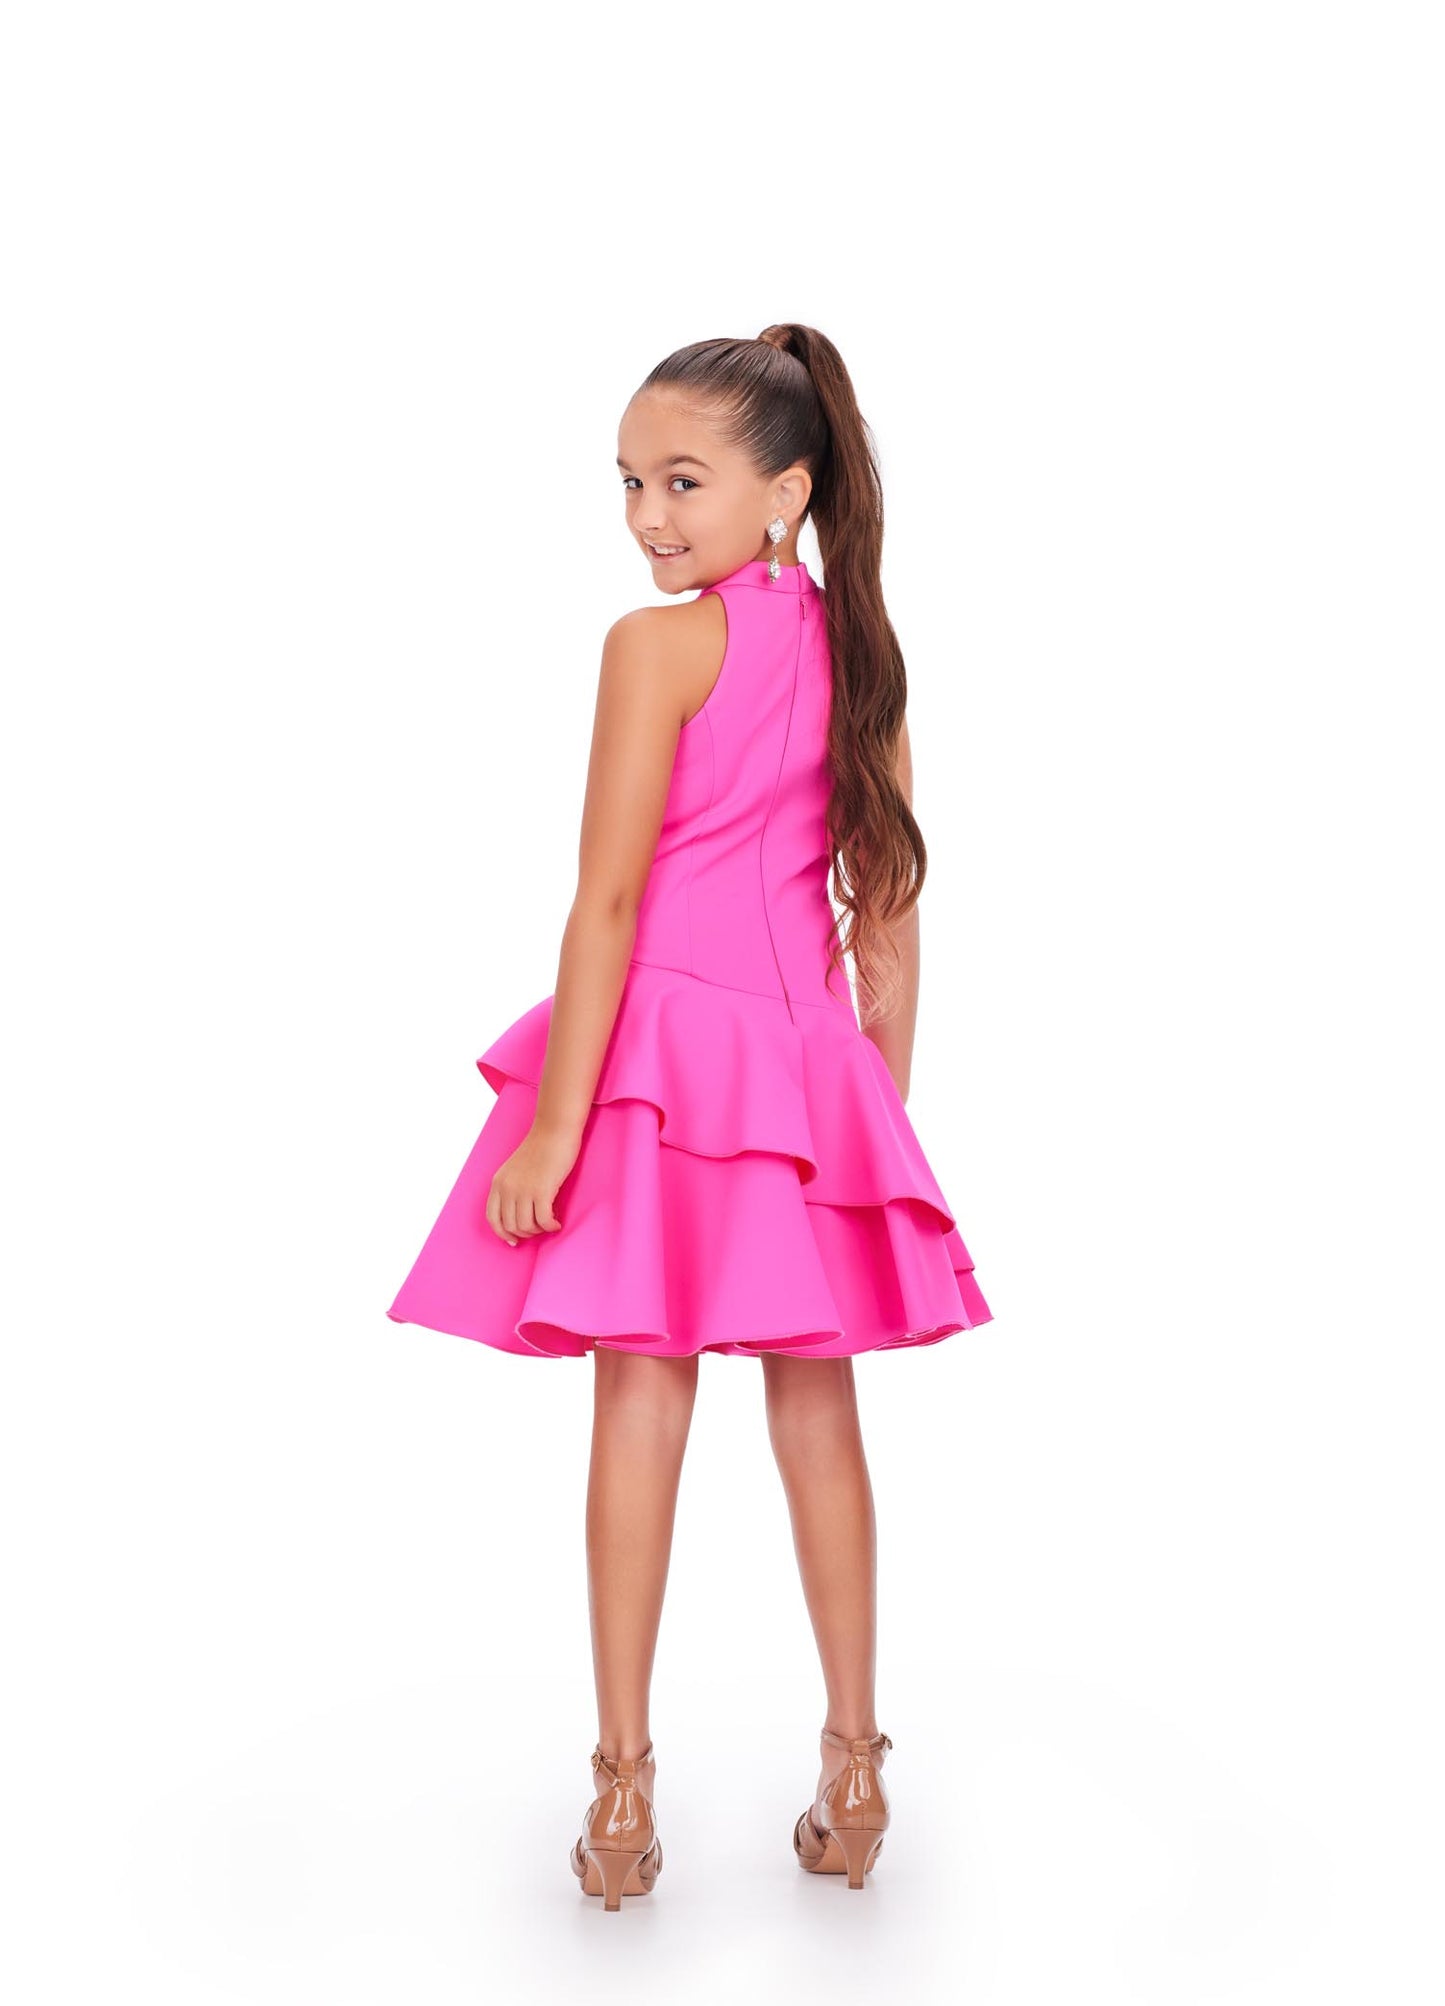 Ashley Lauren Kids 8204 Girls hot pink Cocktail Dress with Asymmetrical Tiered Skirt and high neckline